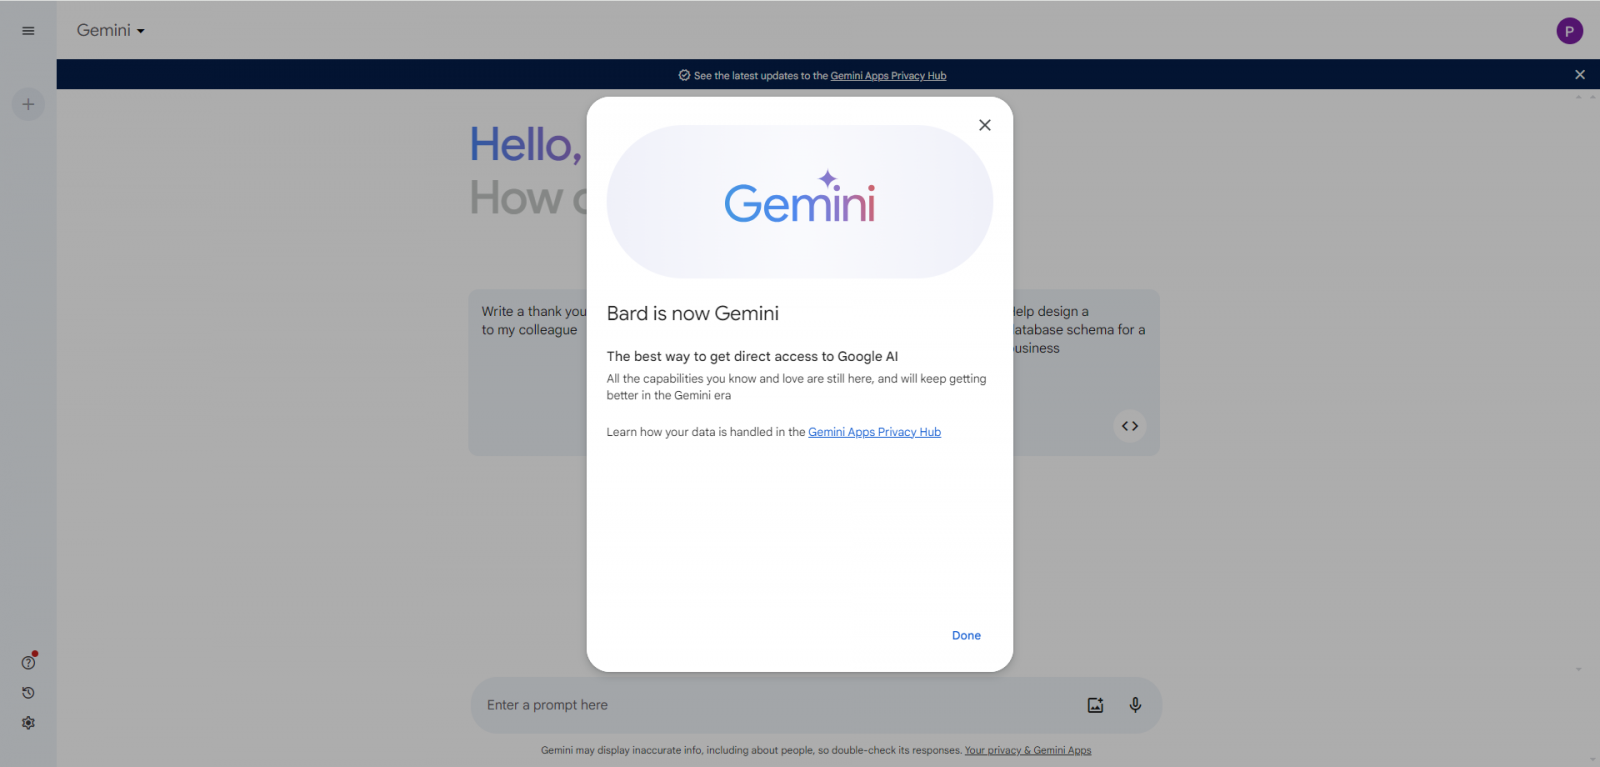 Google รีแบรนด์ Bard AI เป็น Gemini ฉลาดกว่า ทรงพลังกว่า และรุ่น Ultra 1.0 ใหม่